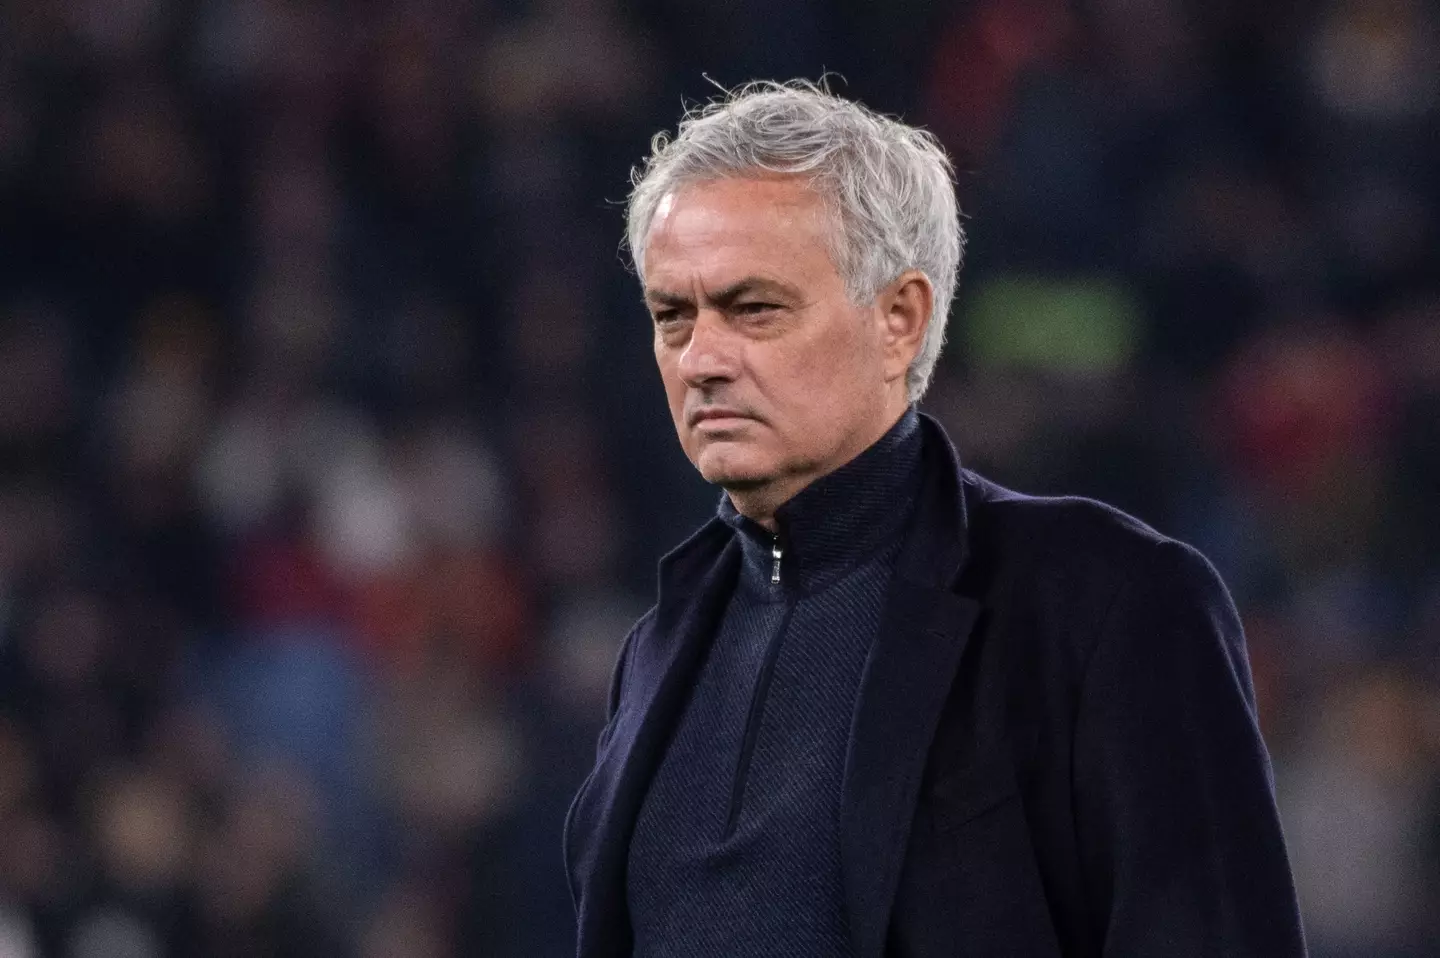 Mourinho has been sacked by Roma.